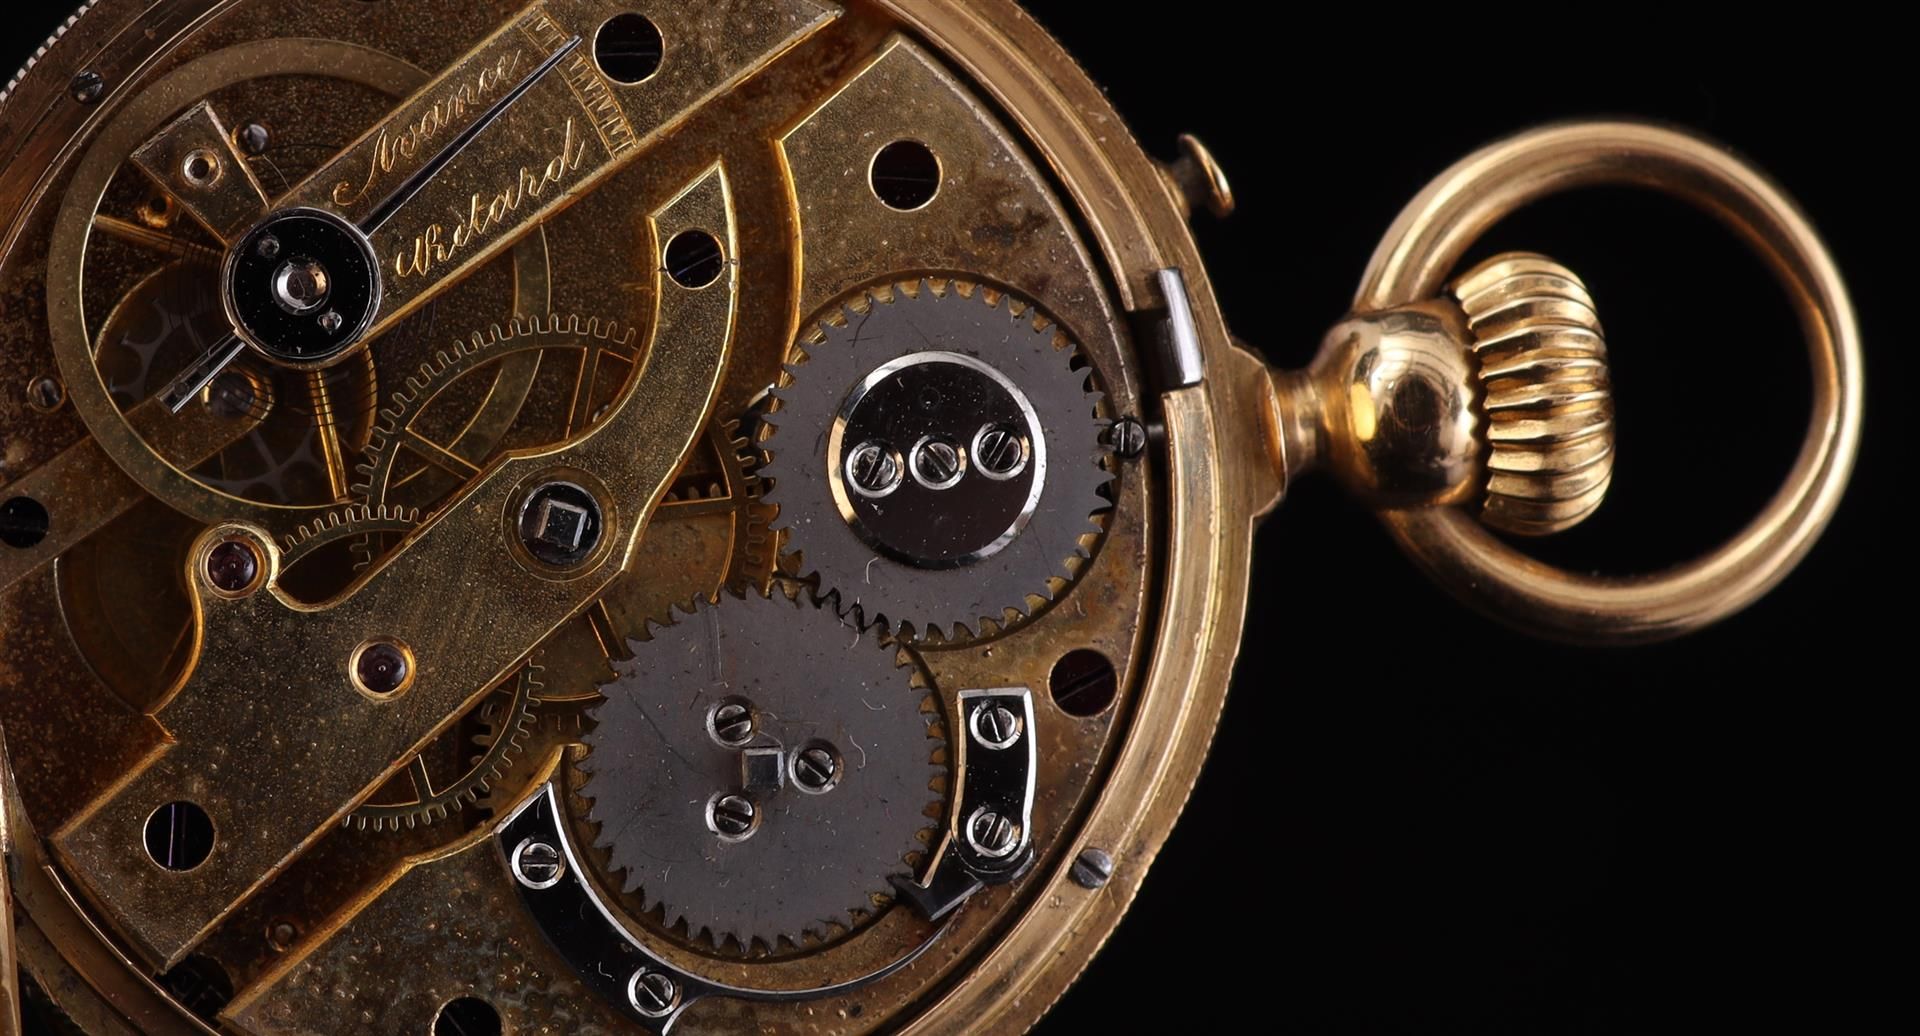 Carbol Bordeaux pocket watch - Image 4 of 4